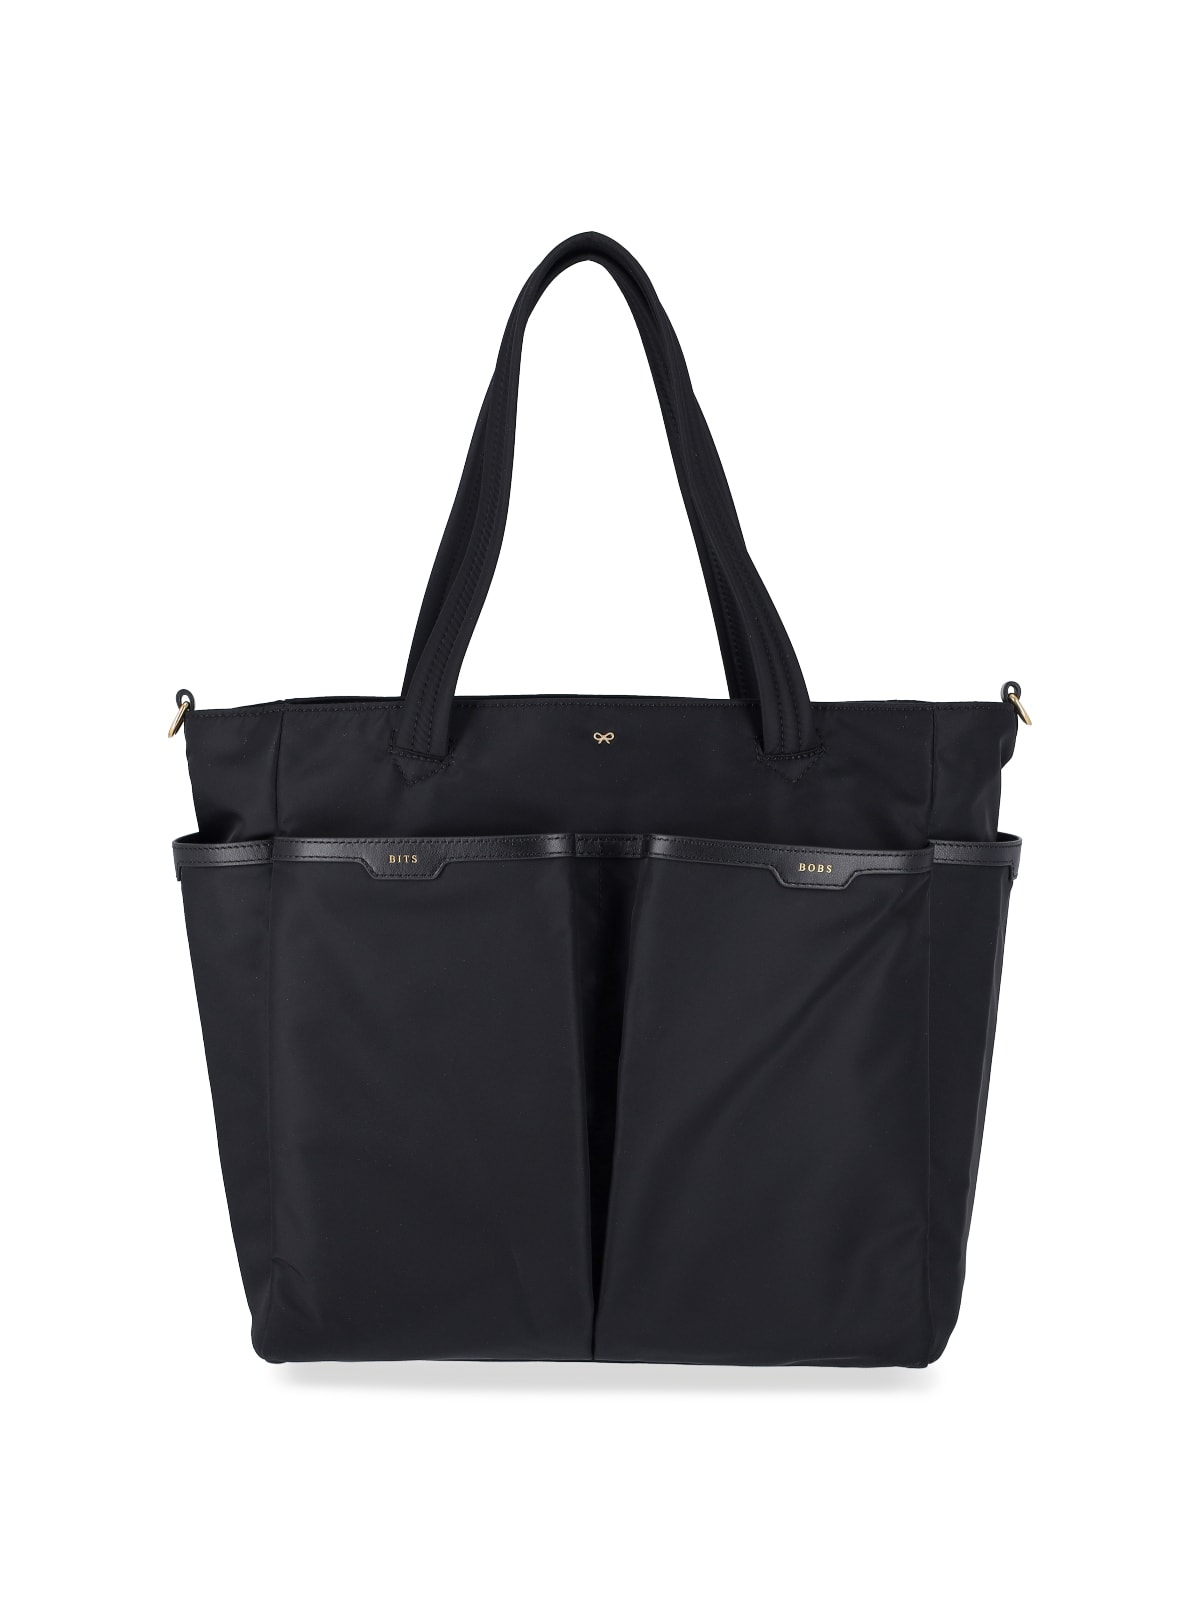 Anya Hindmarch Tote Bag Multi-pocket In Black